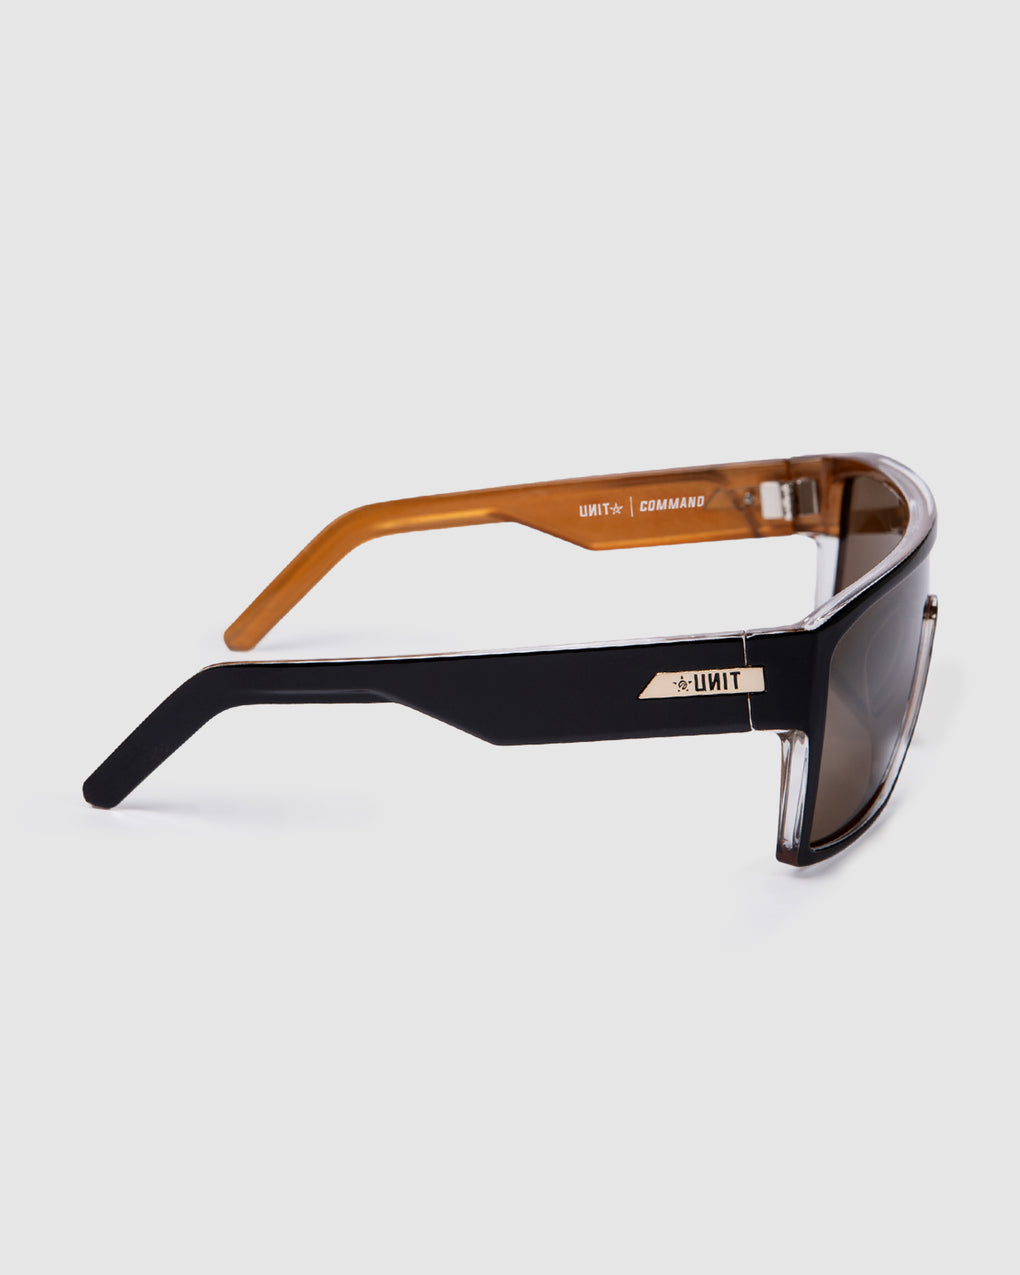 UNIT Sunglasses Command - Black Gold Polarised